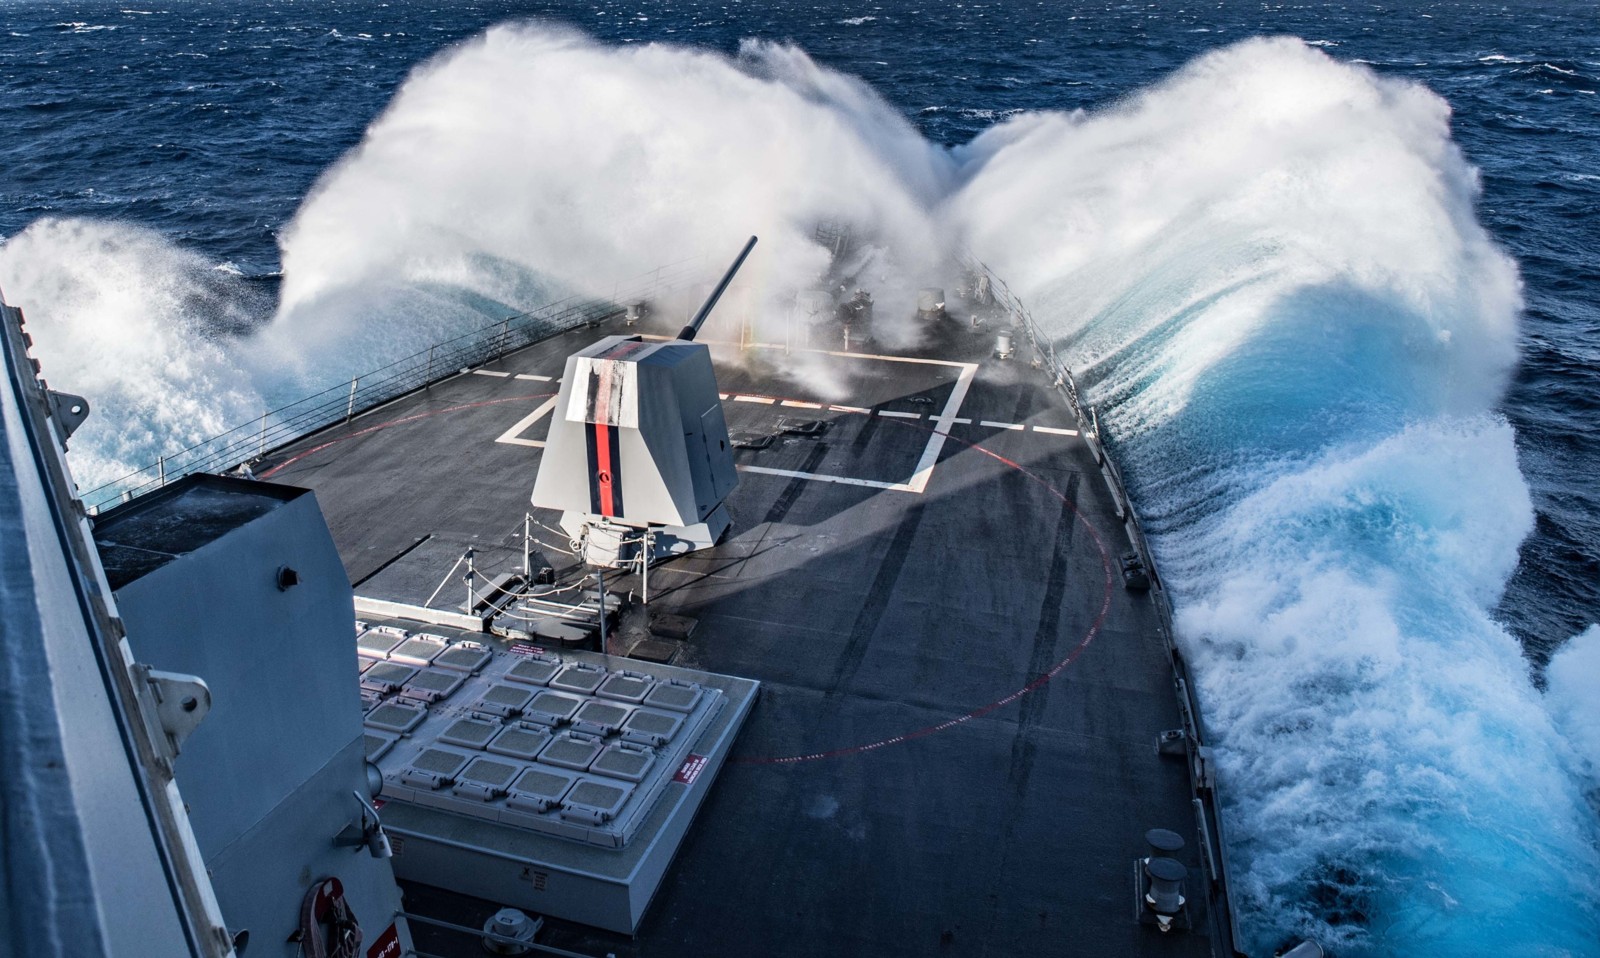 ddg-109 uss jason dunham arleigh burke class guided missile destroyer aegis us navy 62 atlantic ocean